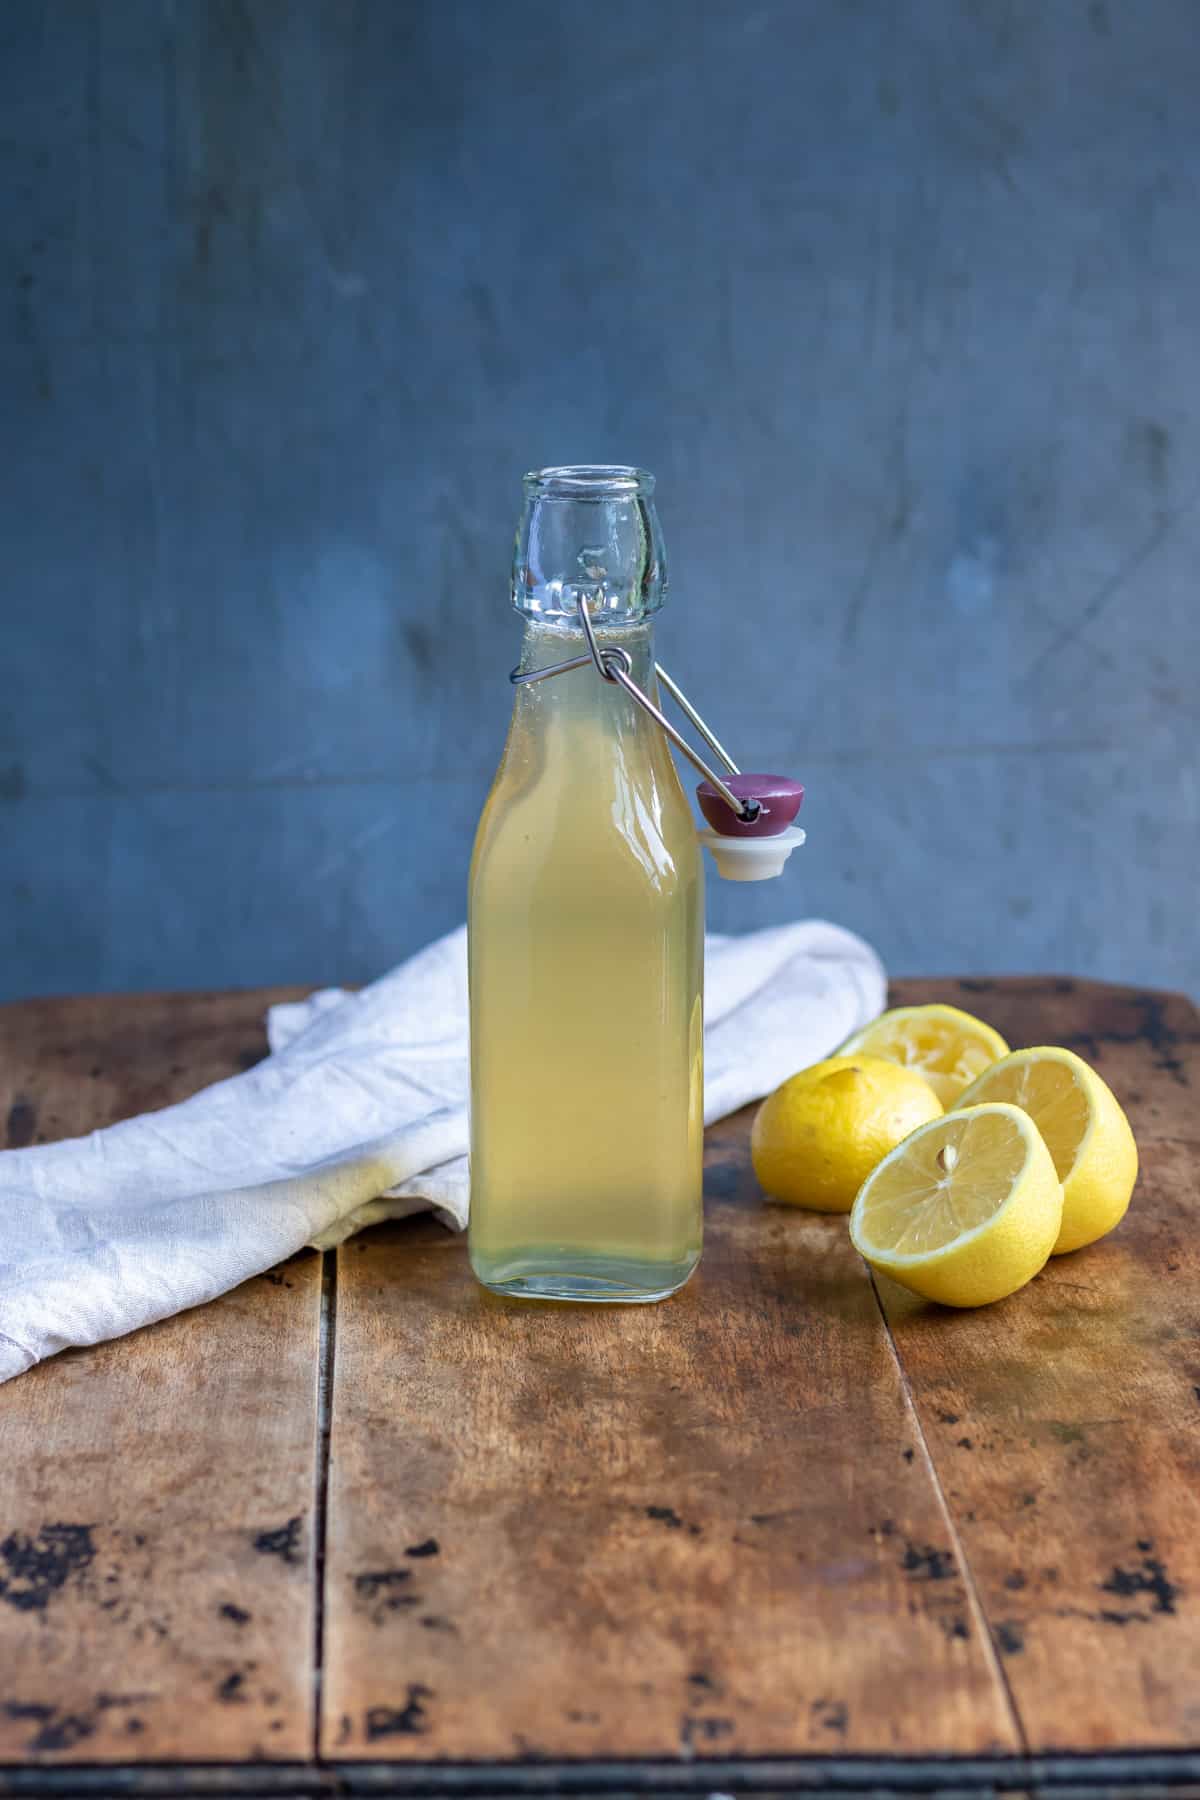 Bottle of lemon syrup and cut lemons on a table.